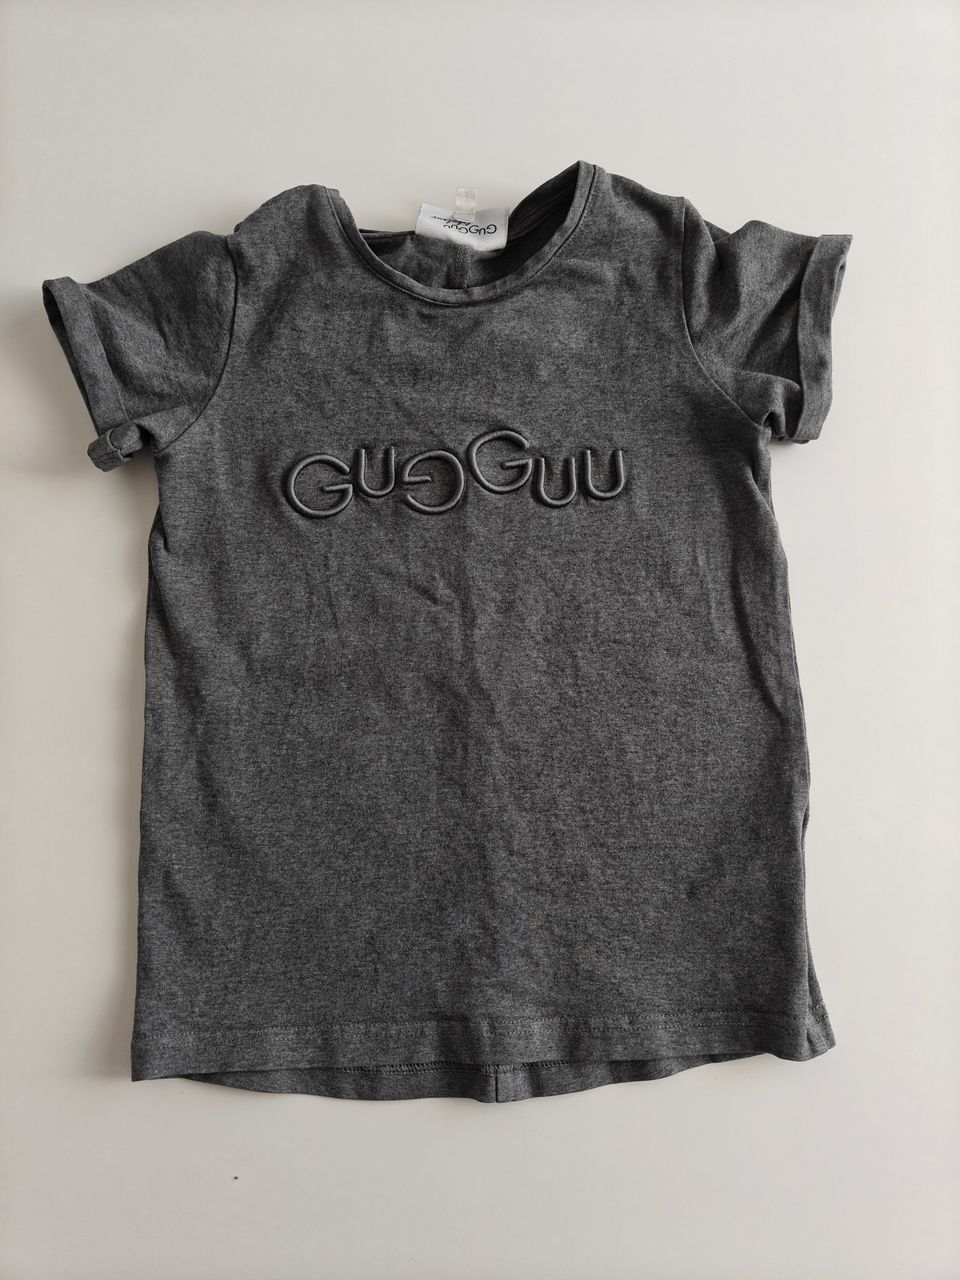 Gugguu logo t-paita